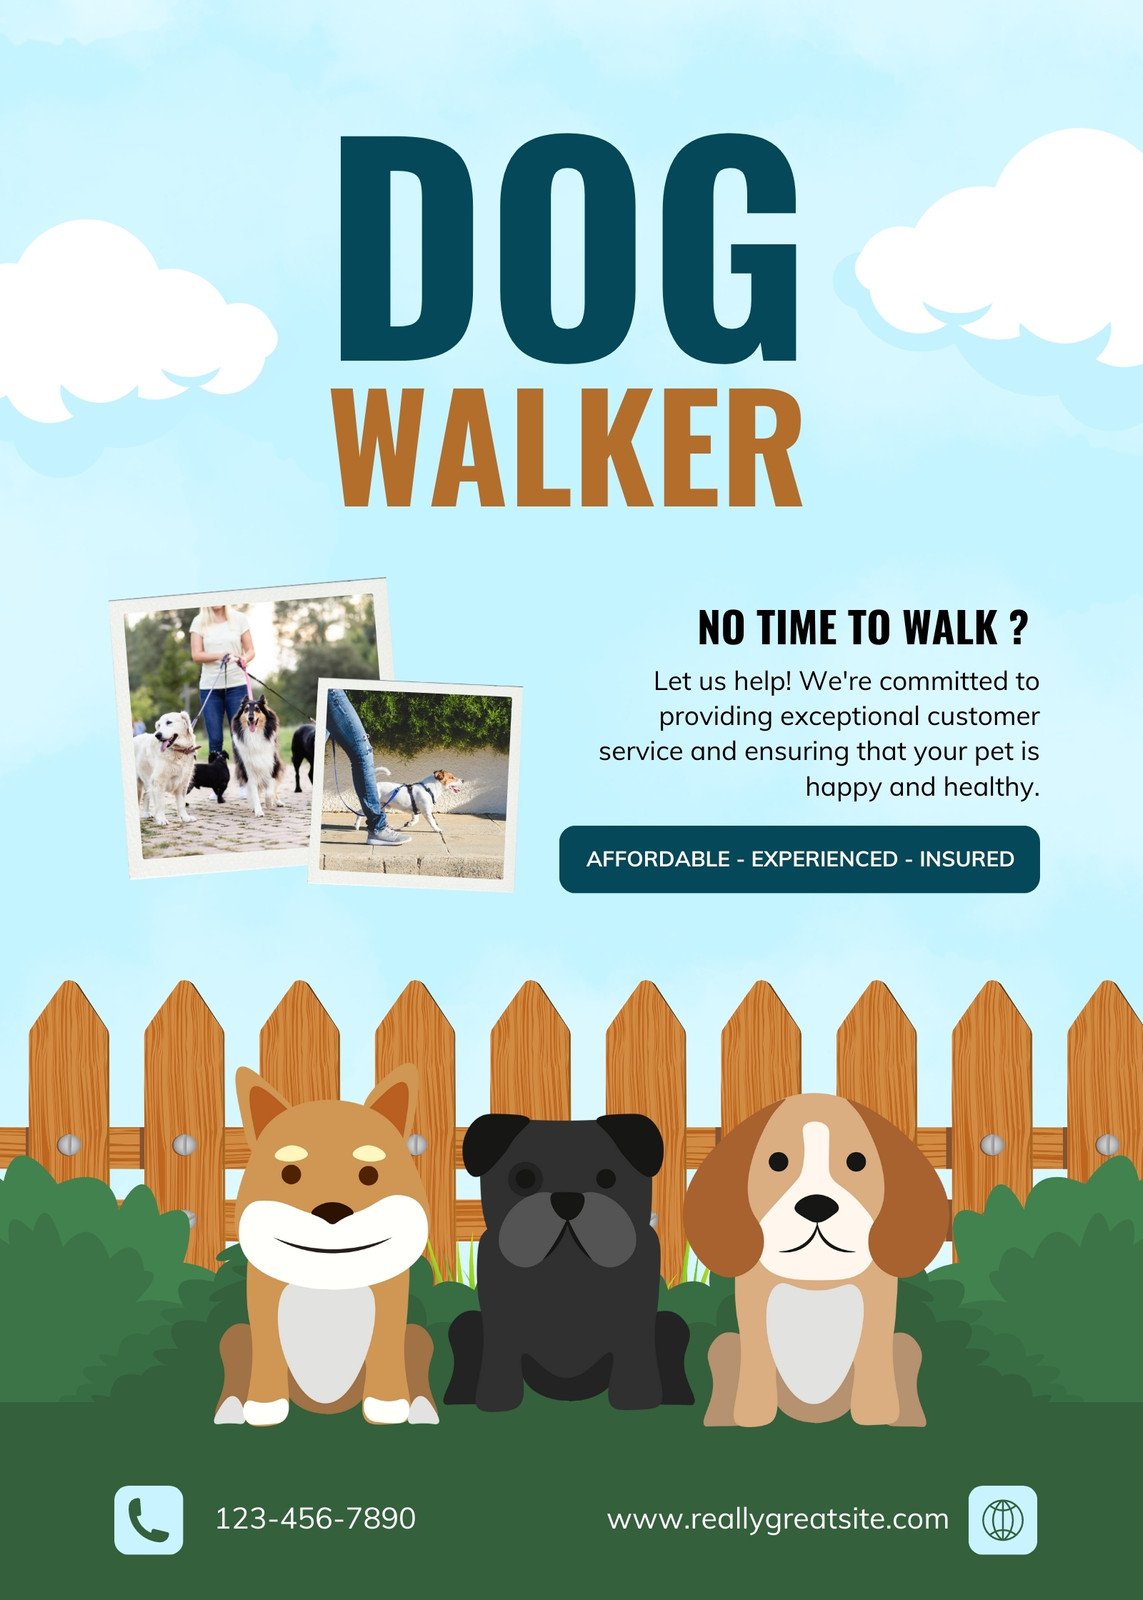 Free printable, customizable dog walker flyer templates